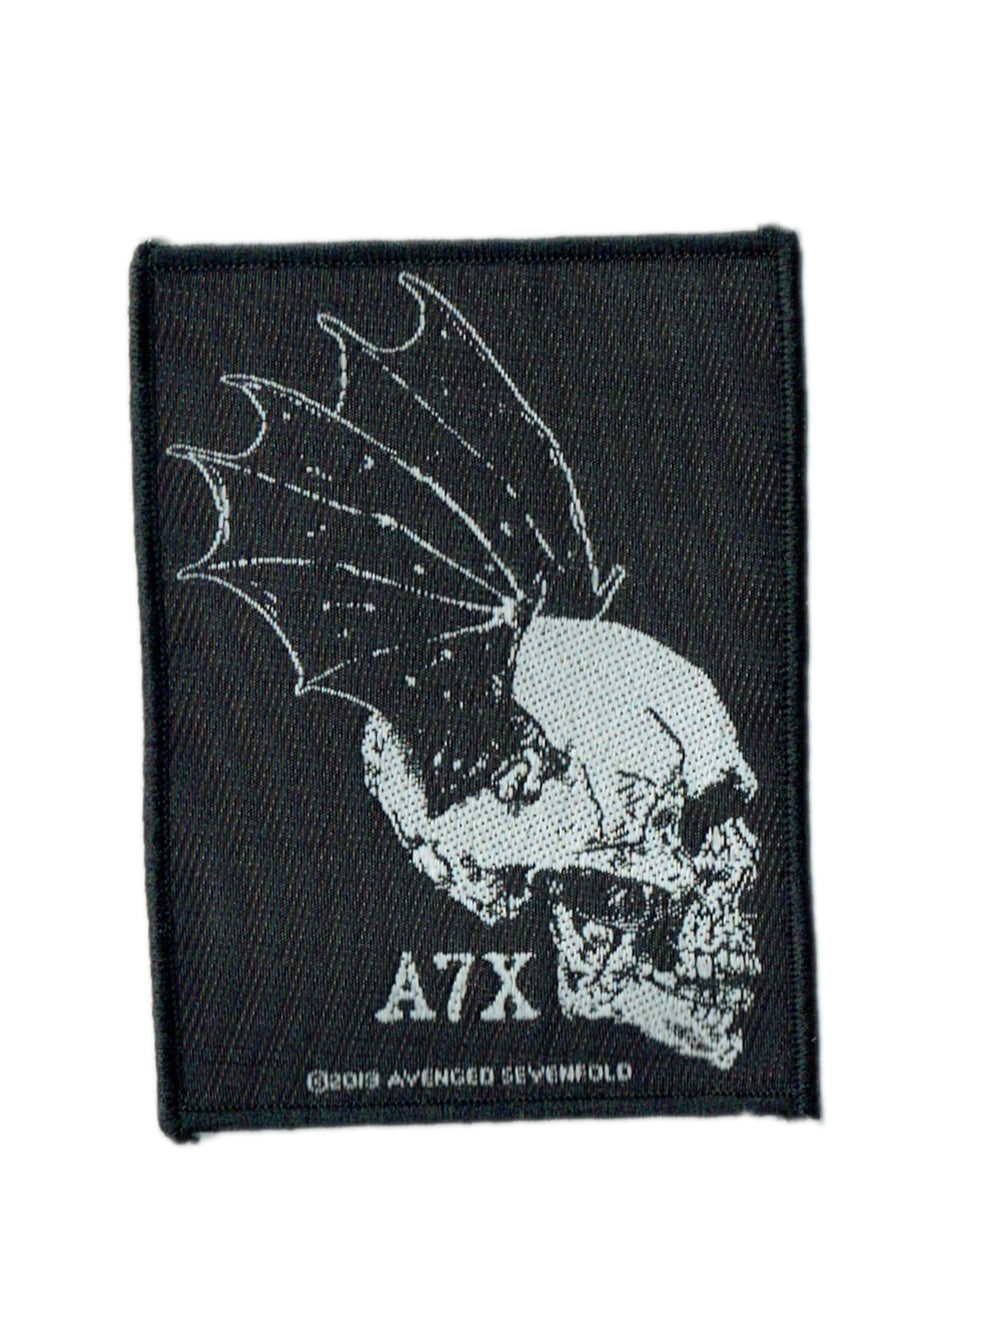 Avenged Sevnenfold Skull Wings Official Woven Patch Brand New